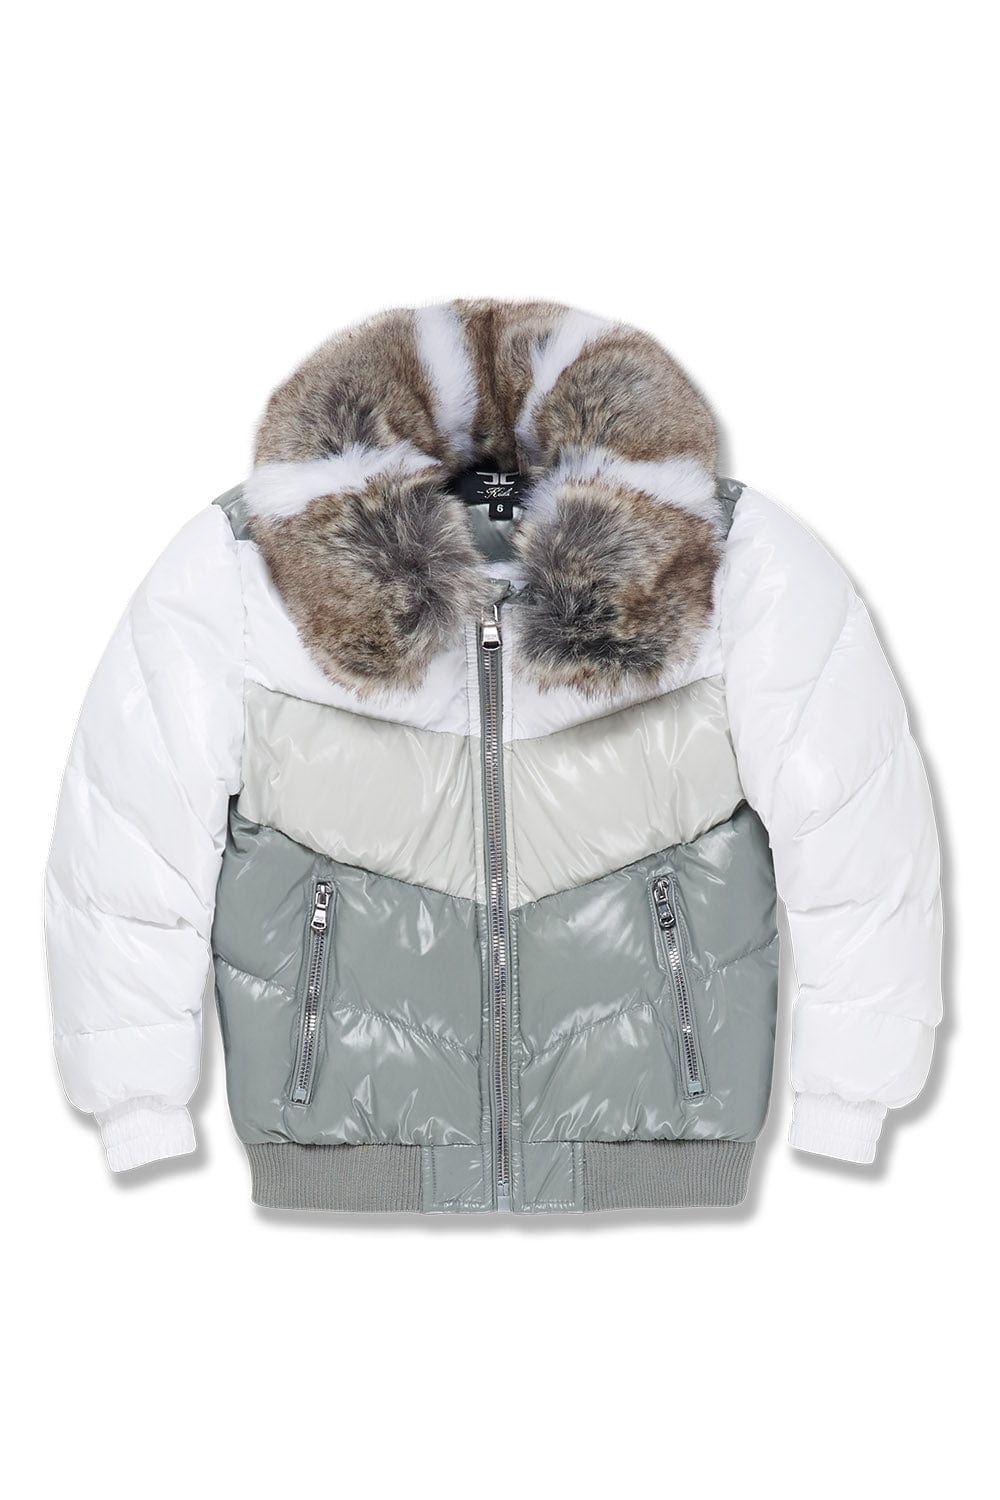 JC Kids Kids Sugar Hill Puffer Jacket (Arctic White) Arctic White / 2